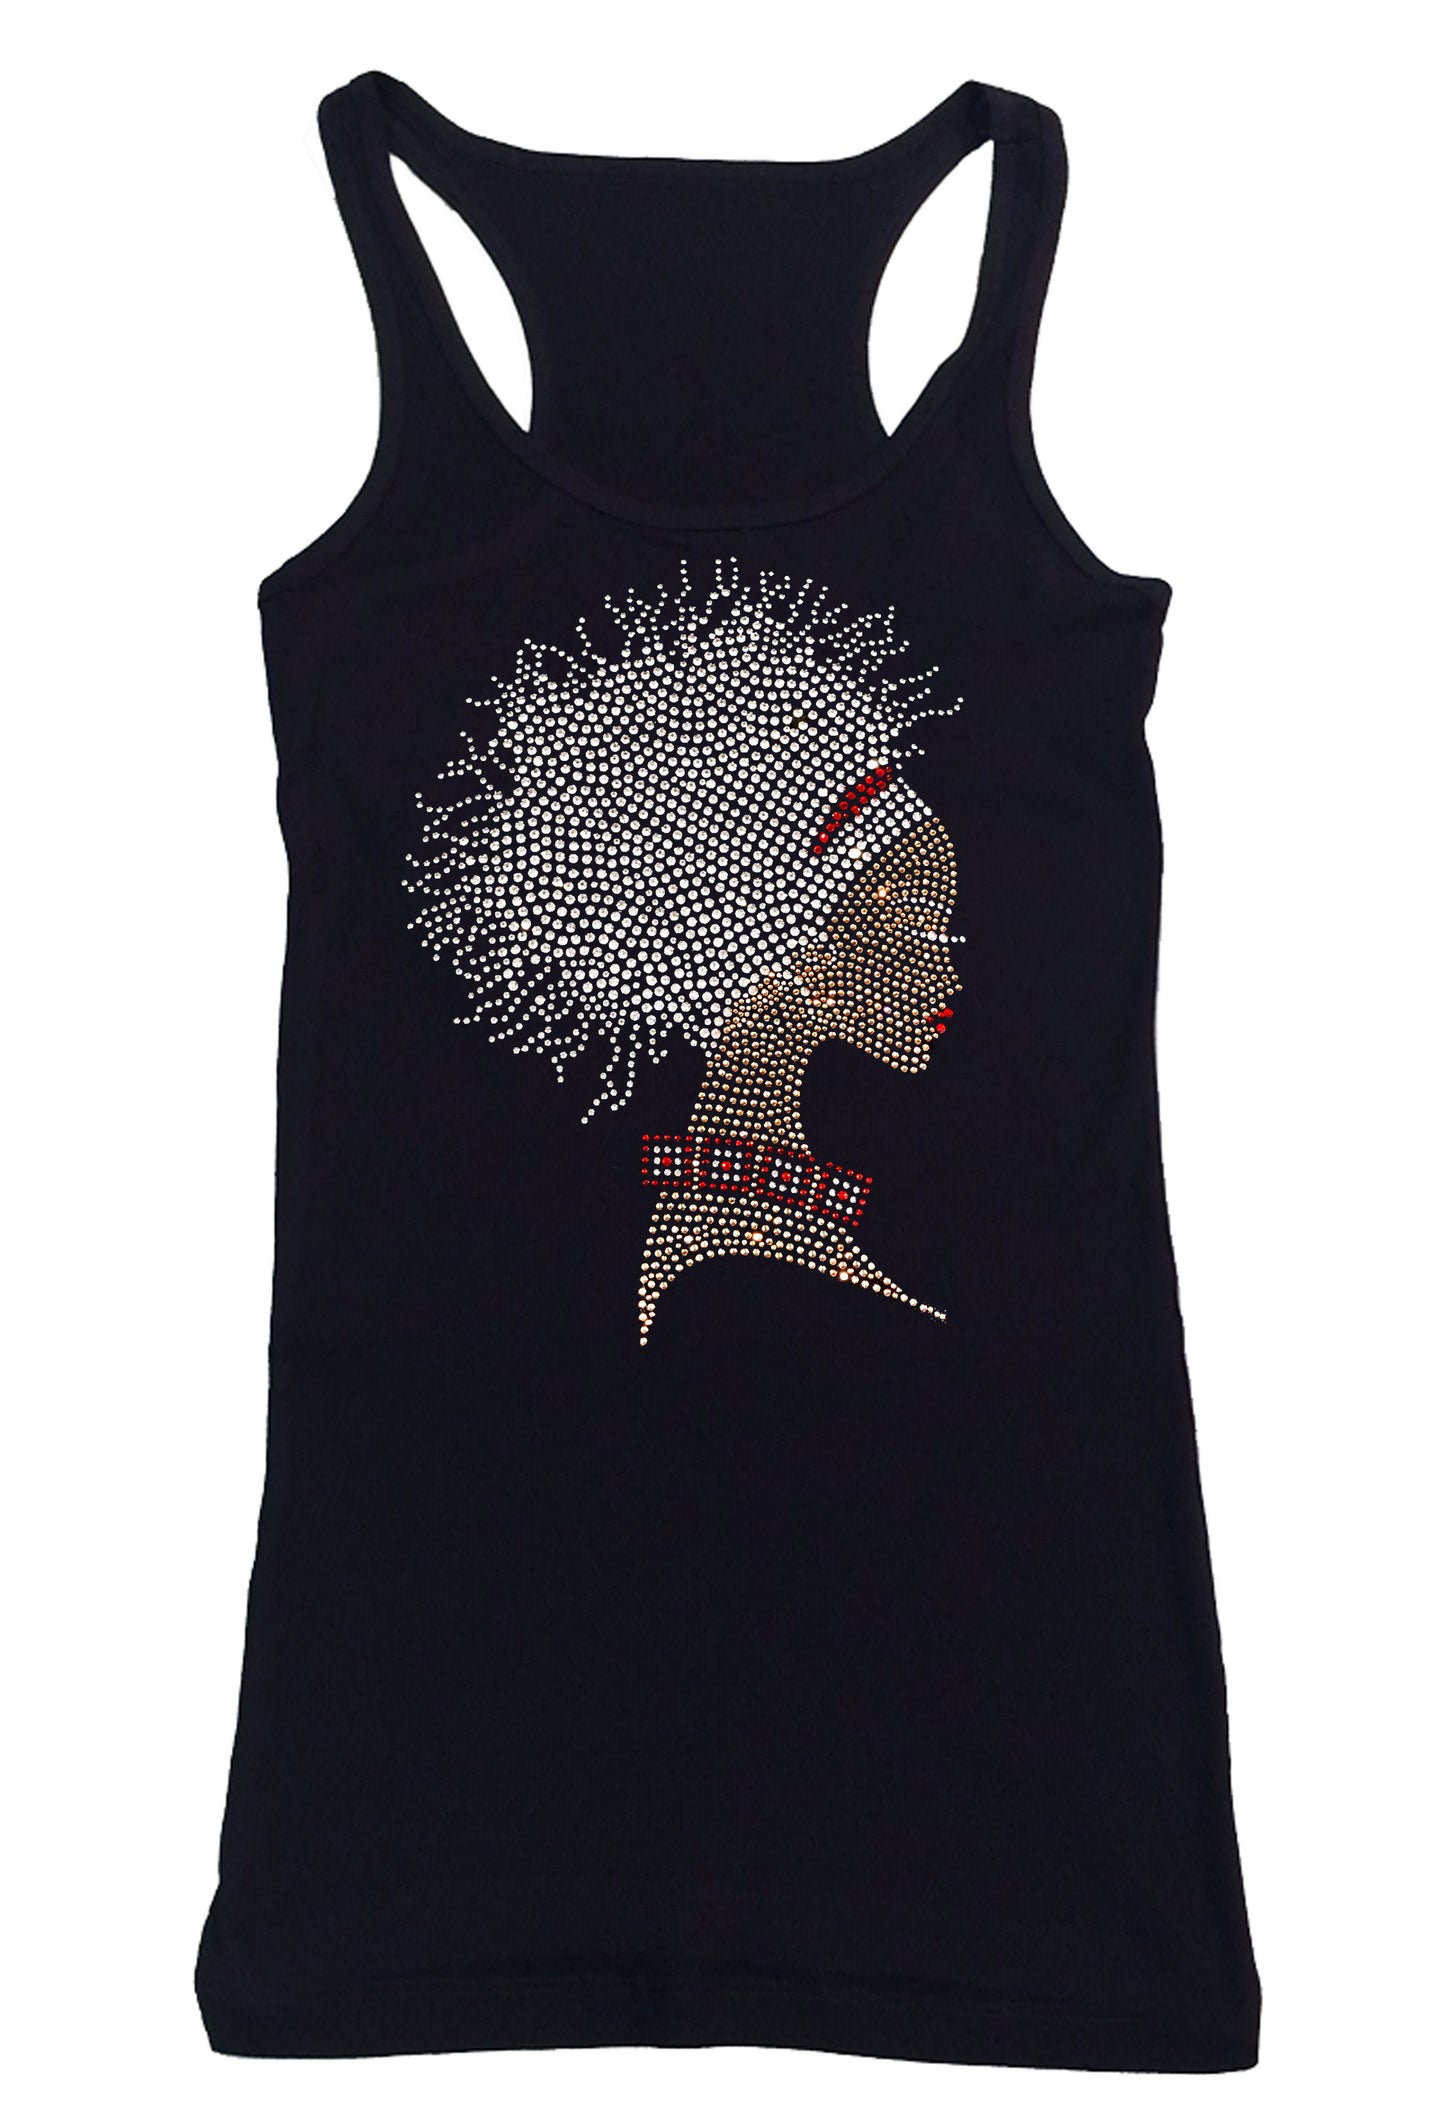 Womens T-shirt with Afro Dreds Locks Girl in Rhinestones